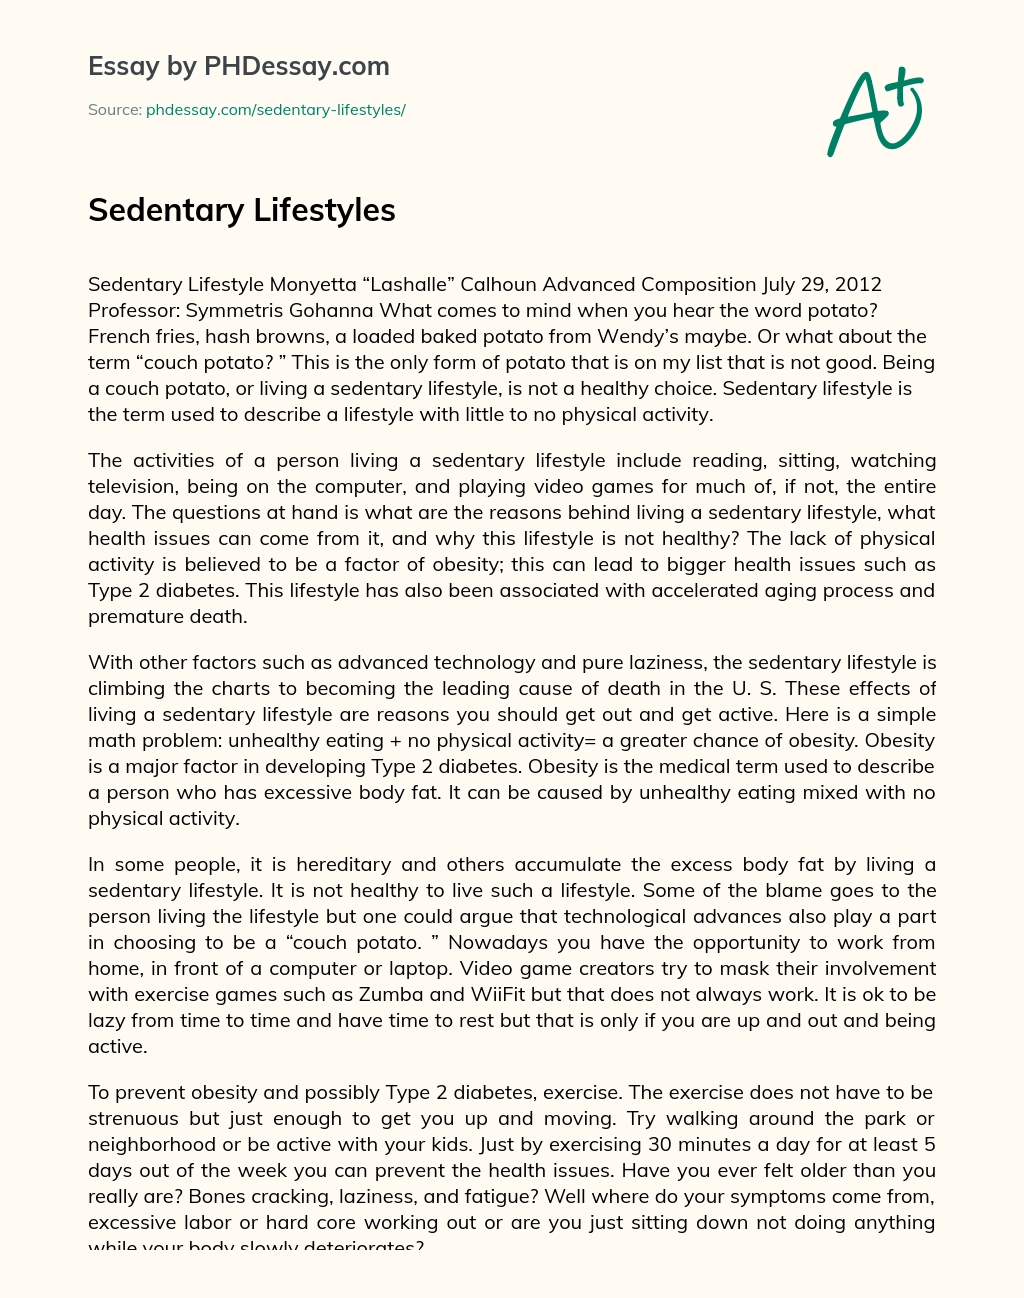 Sedentary Lifestyles essay